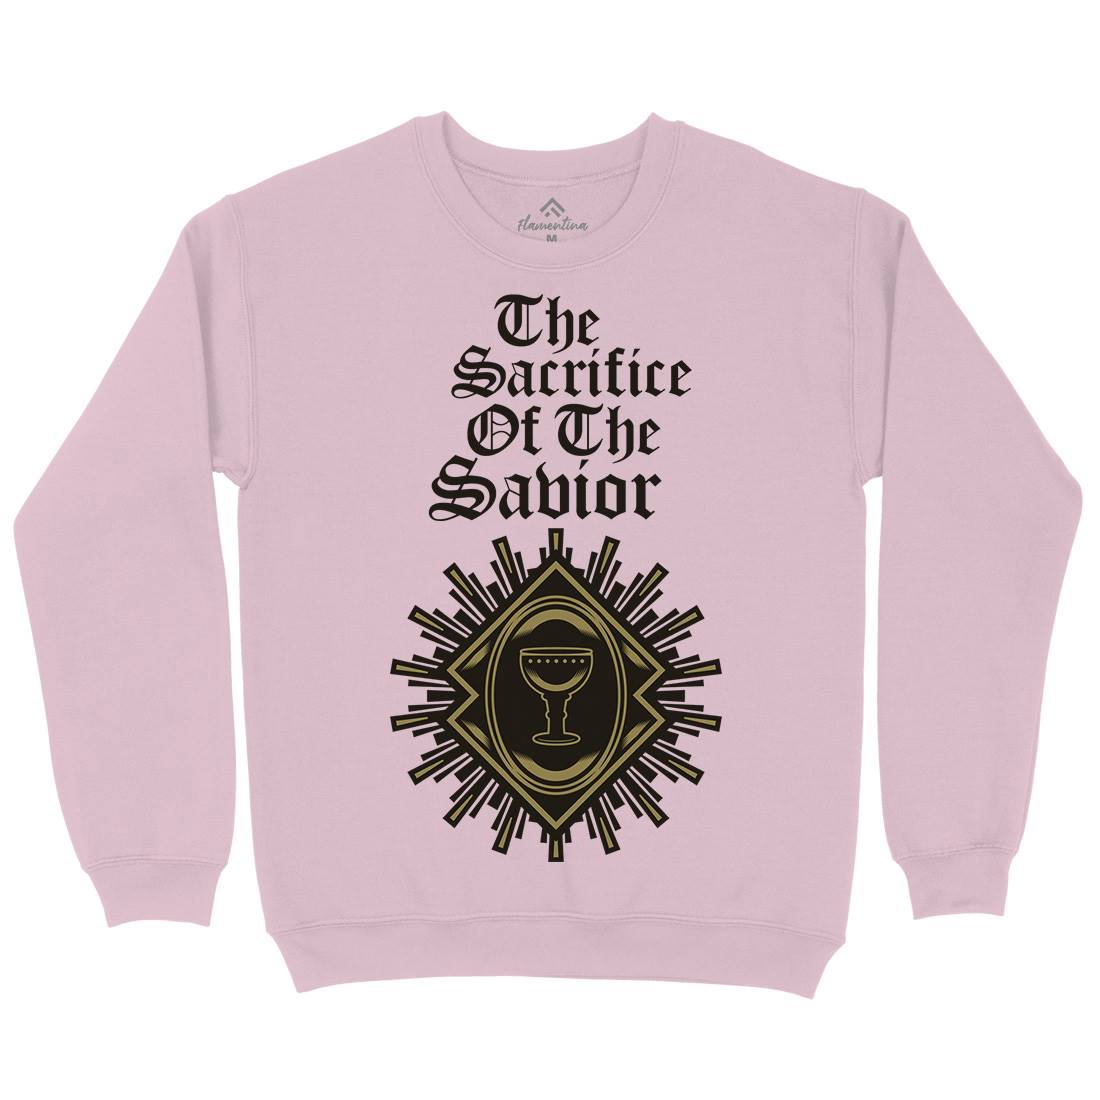 Sacrifice Of The Saviour Kids Crew Neck Sweatshirt Religion A385